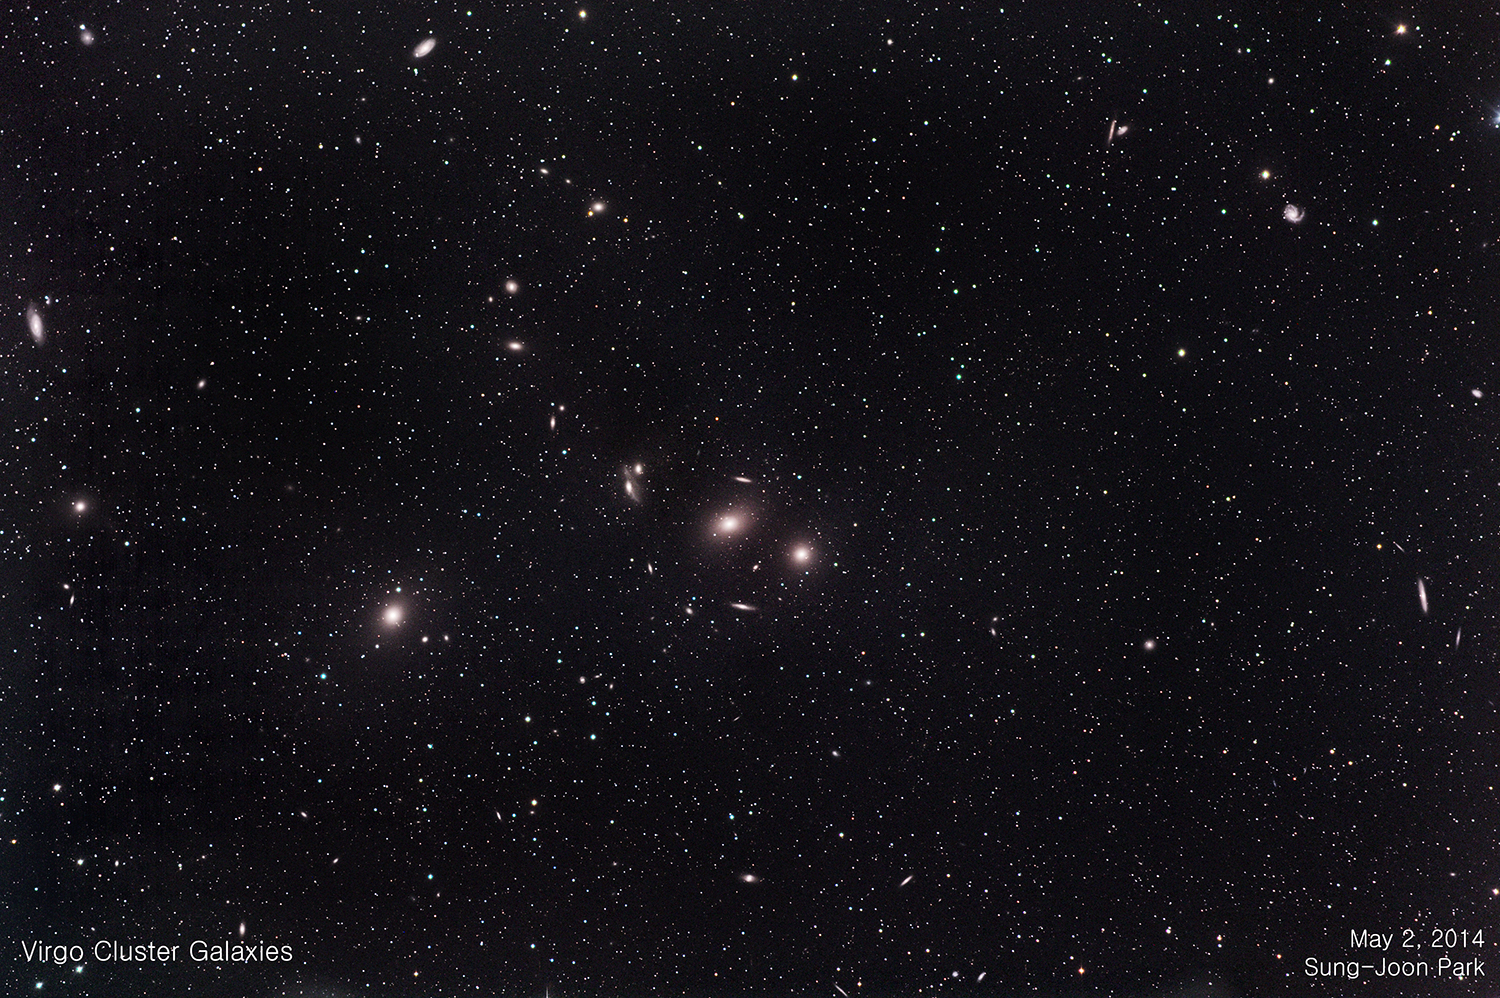 Virgo_Cluster_Galaxies_title_20140502_resize.jpg